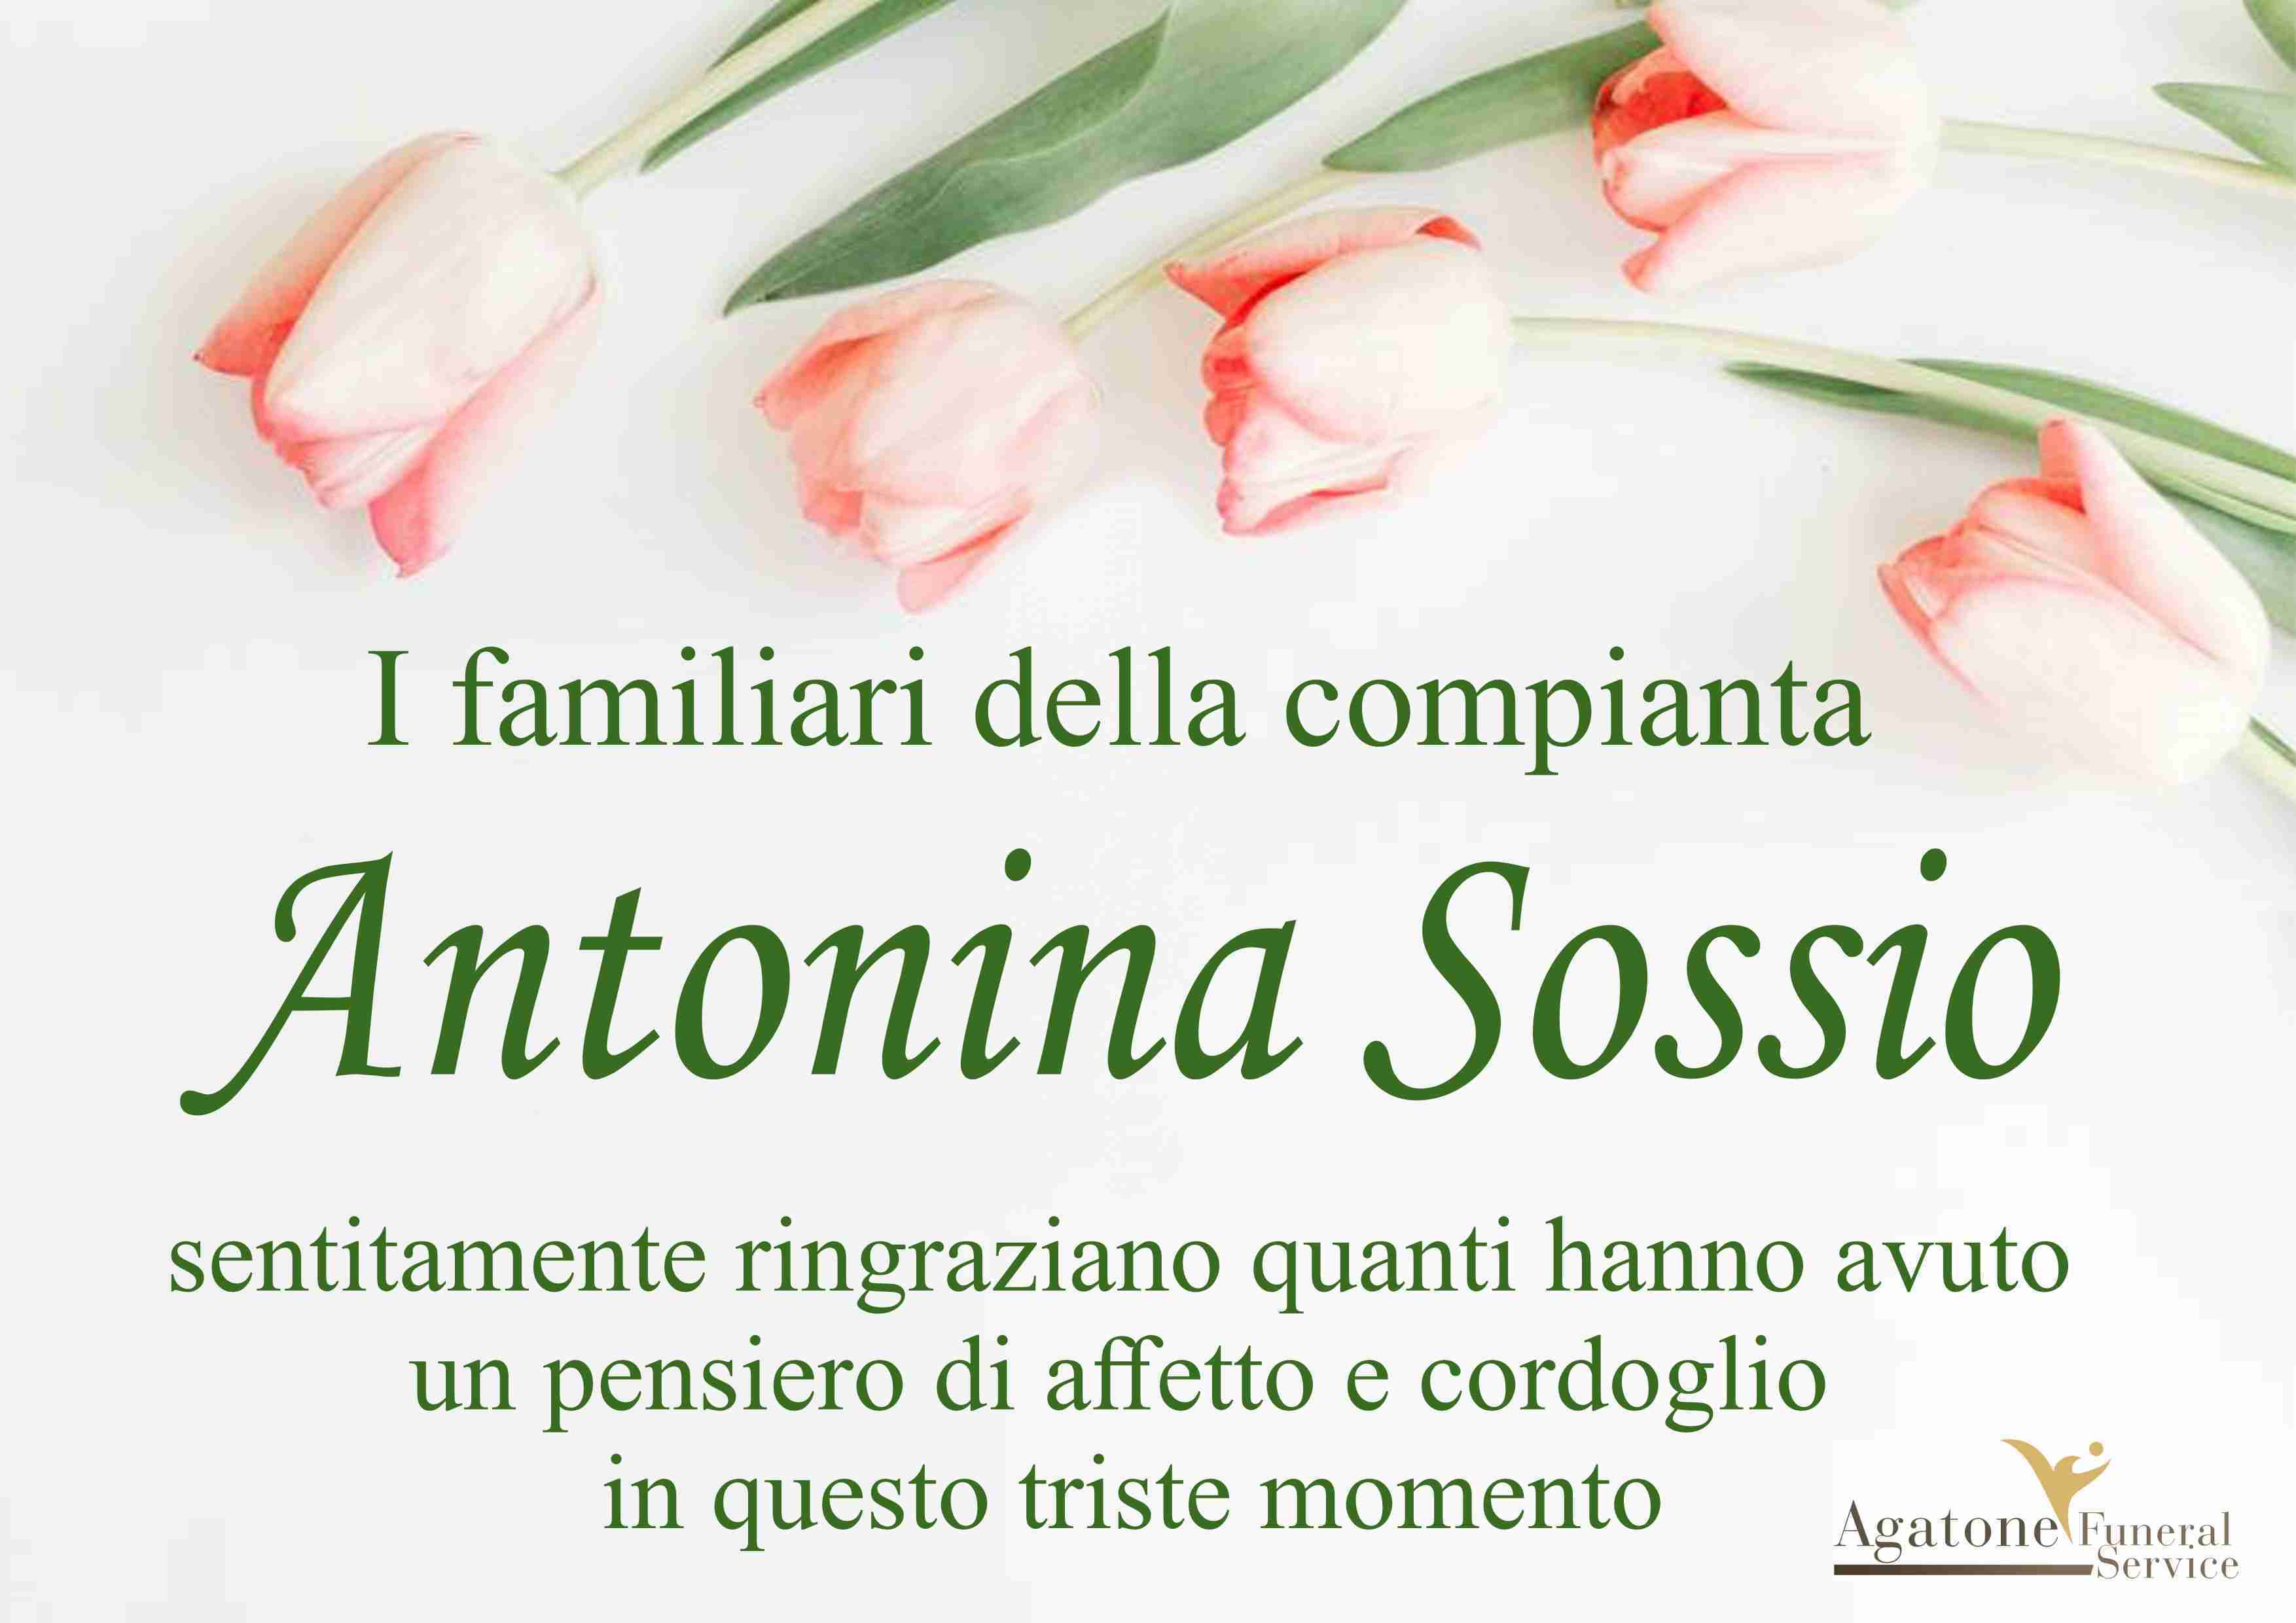 Antonina Sossio